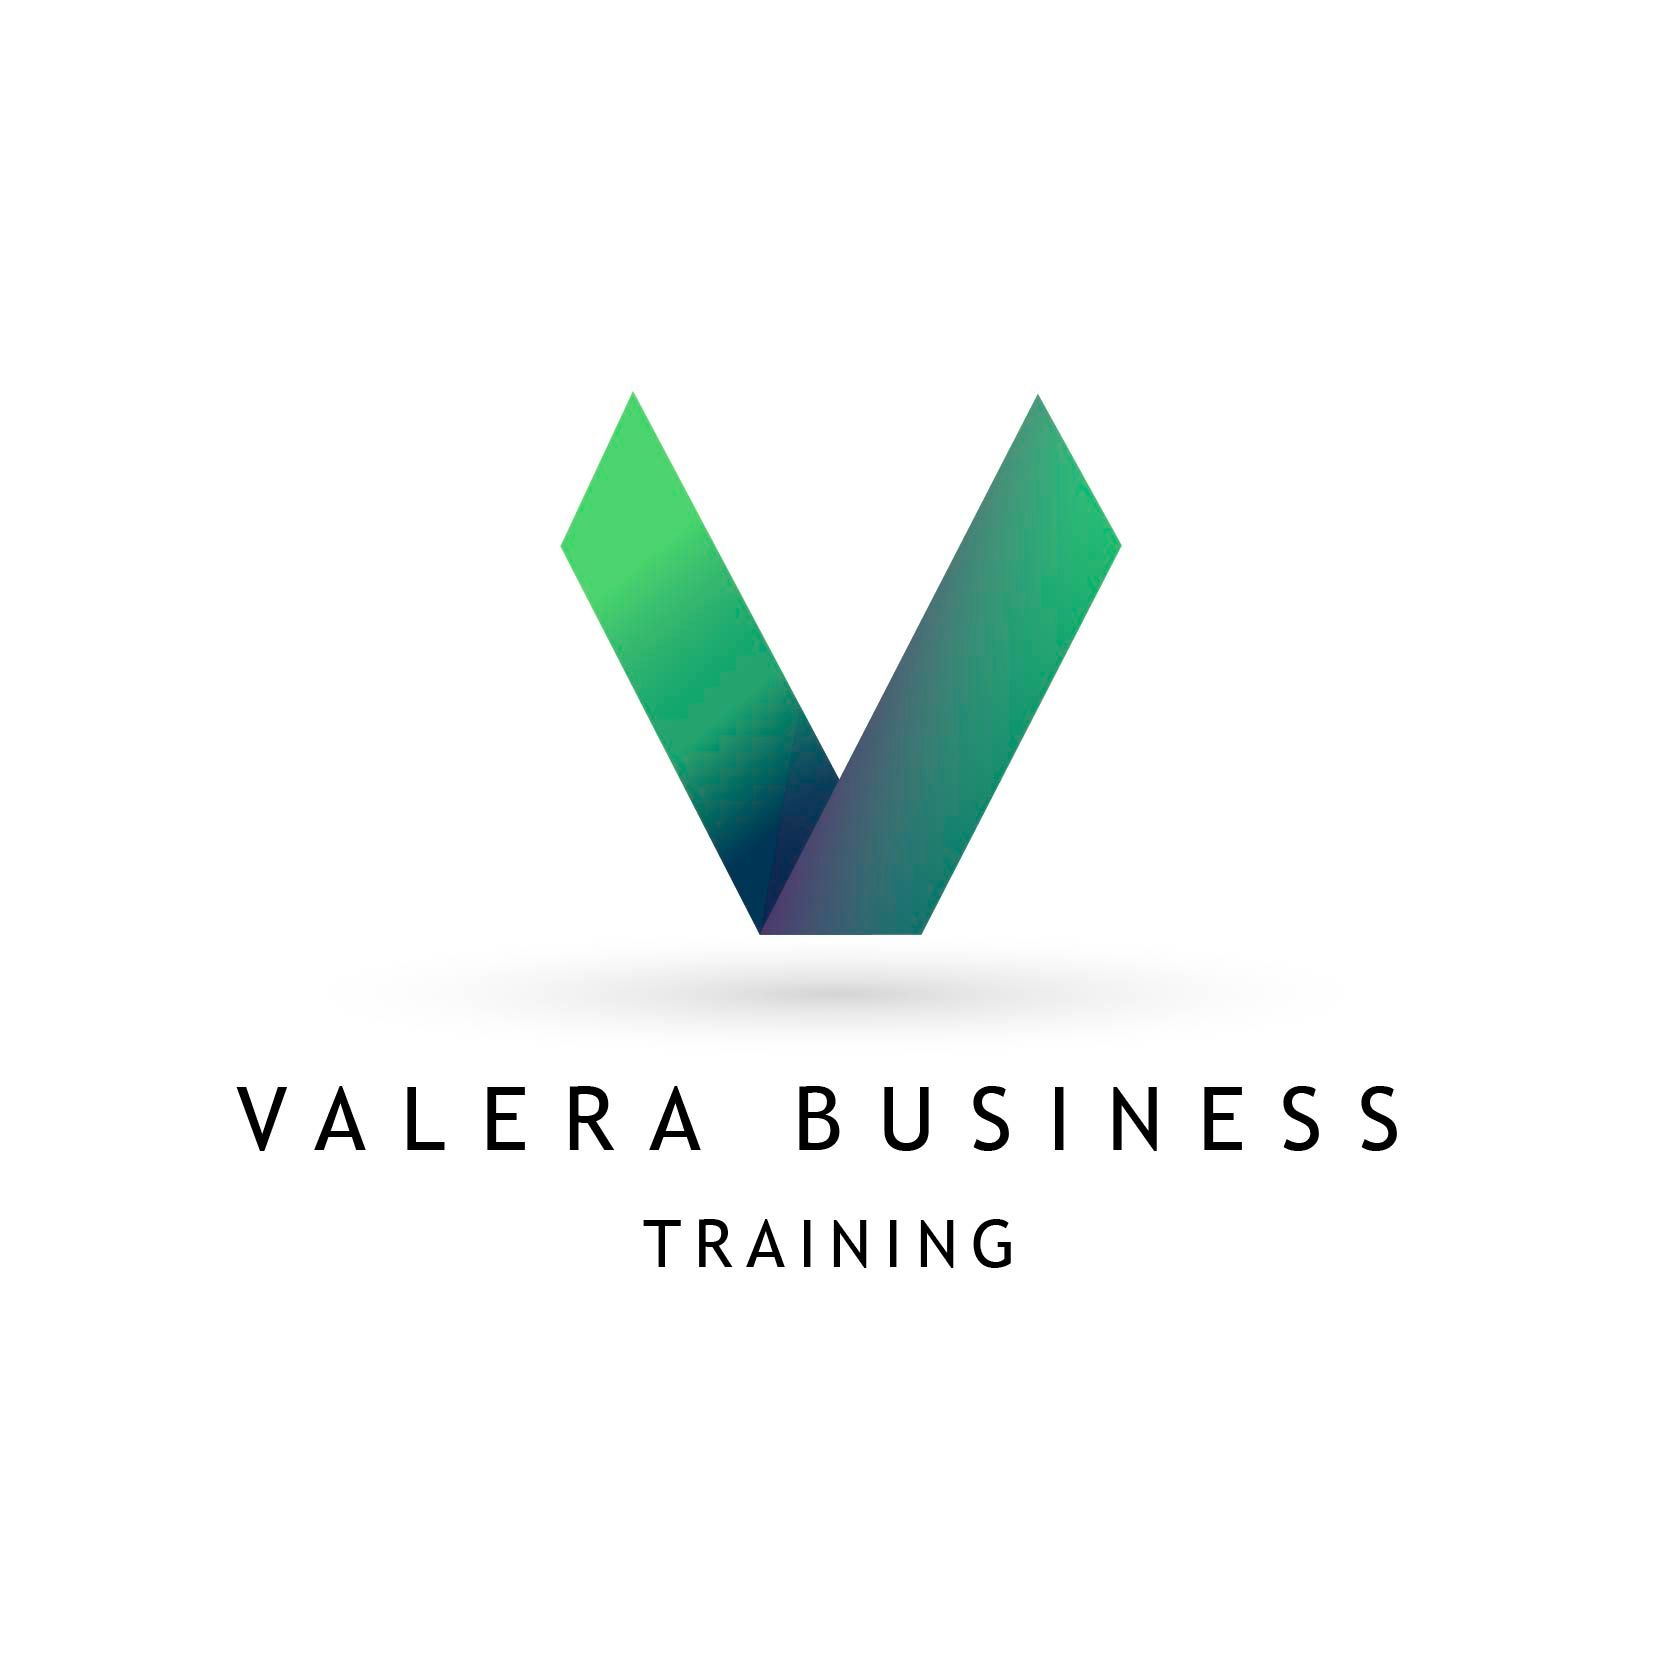 VALERA BUSINESS TRAINING logo